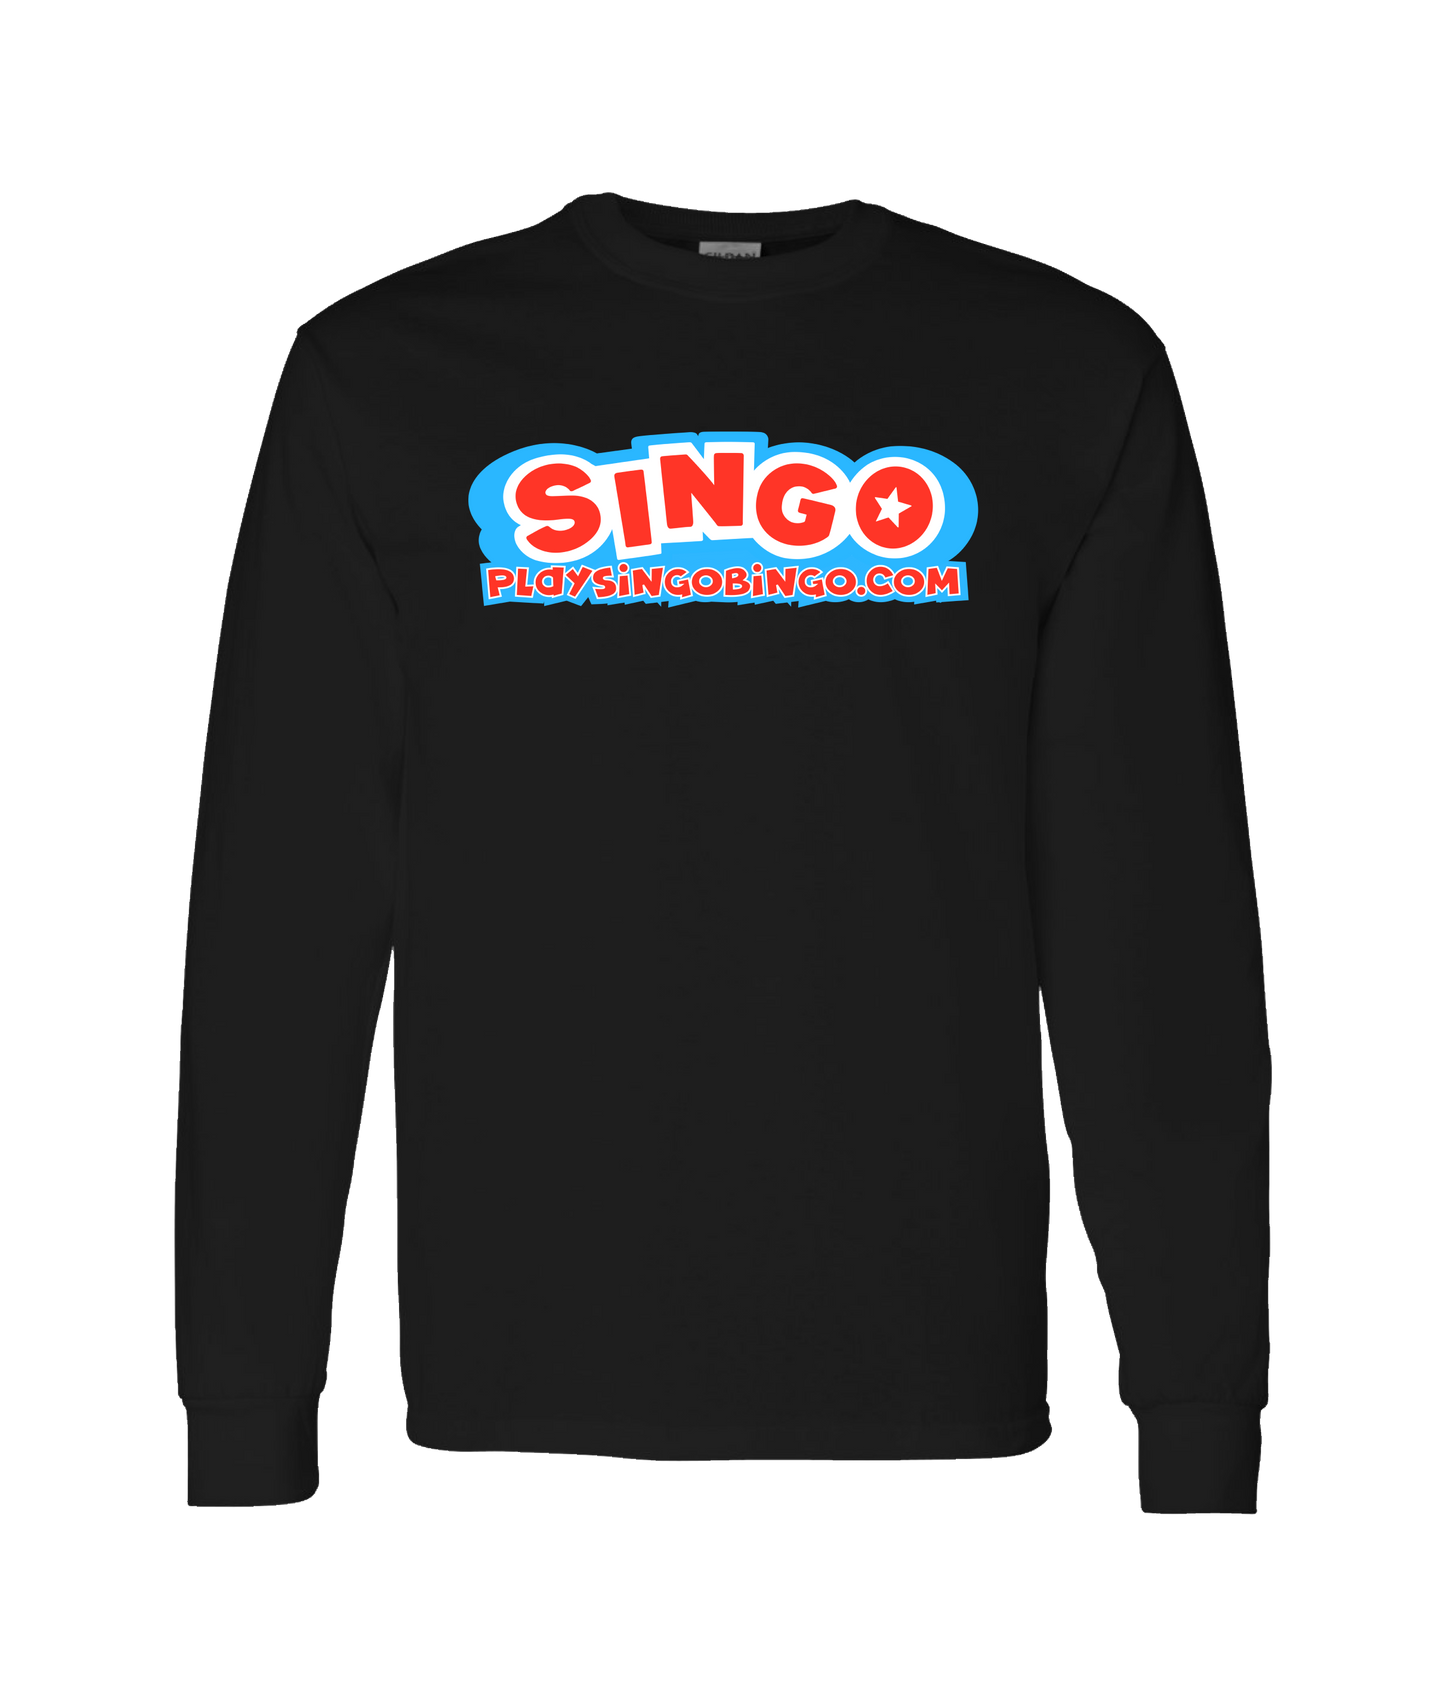 Singo Music Bingo - PlaySingoBingo.com - Black Long Sleeve T